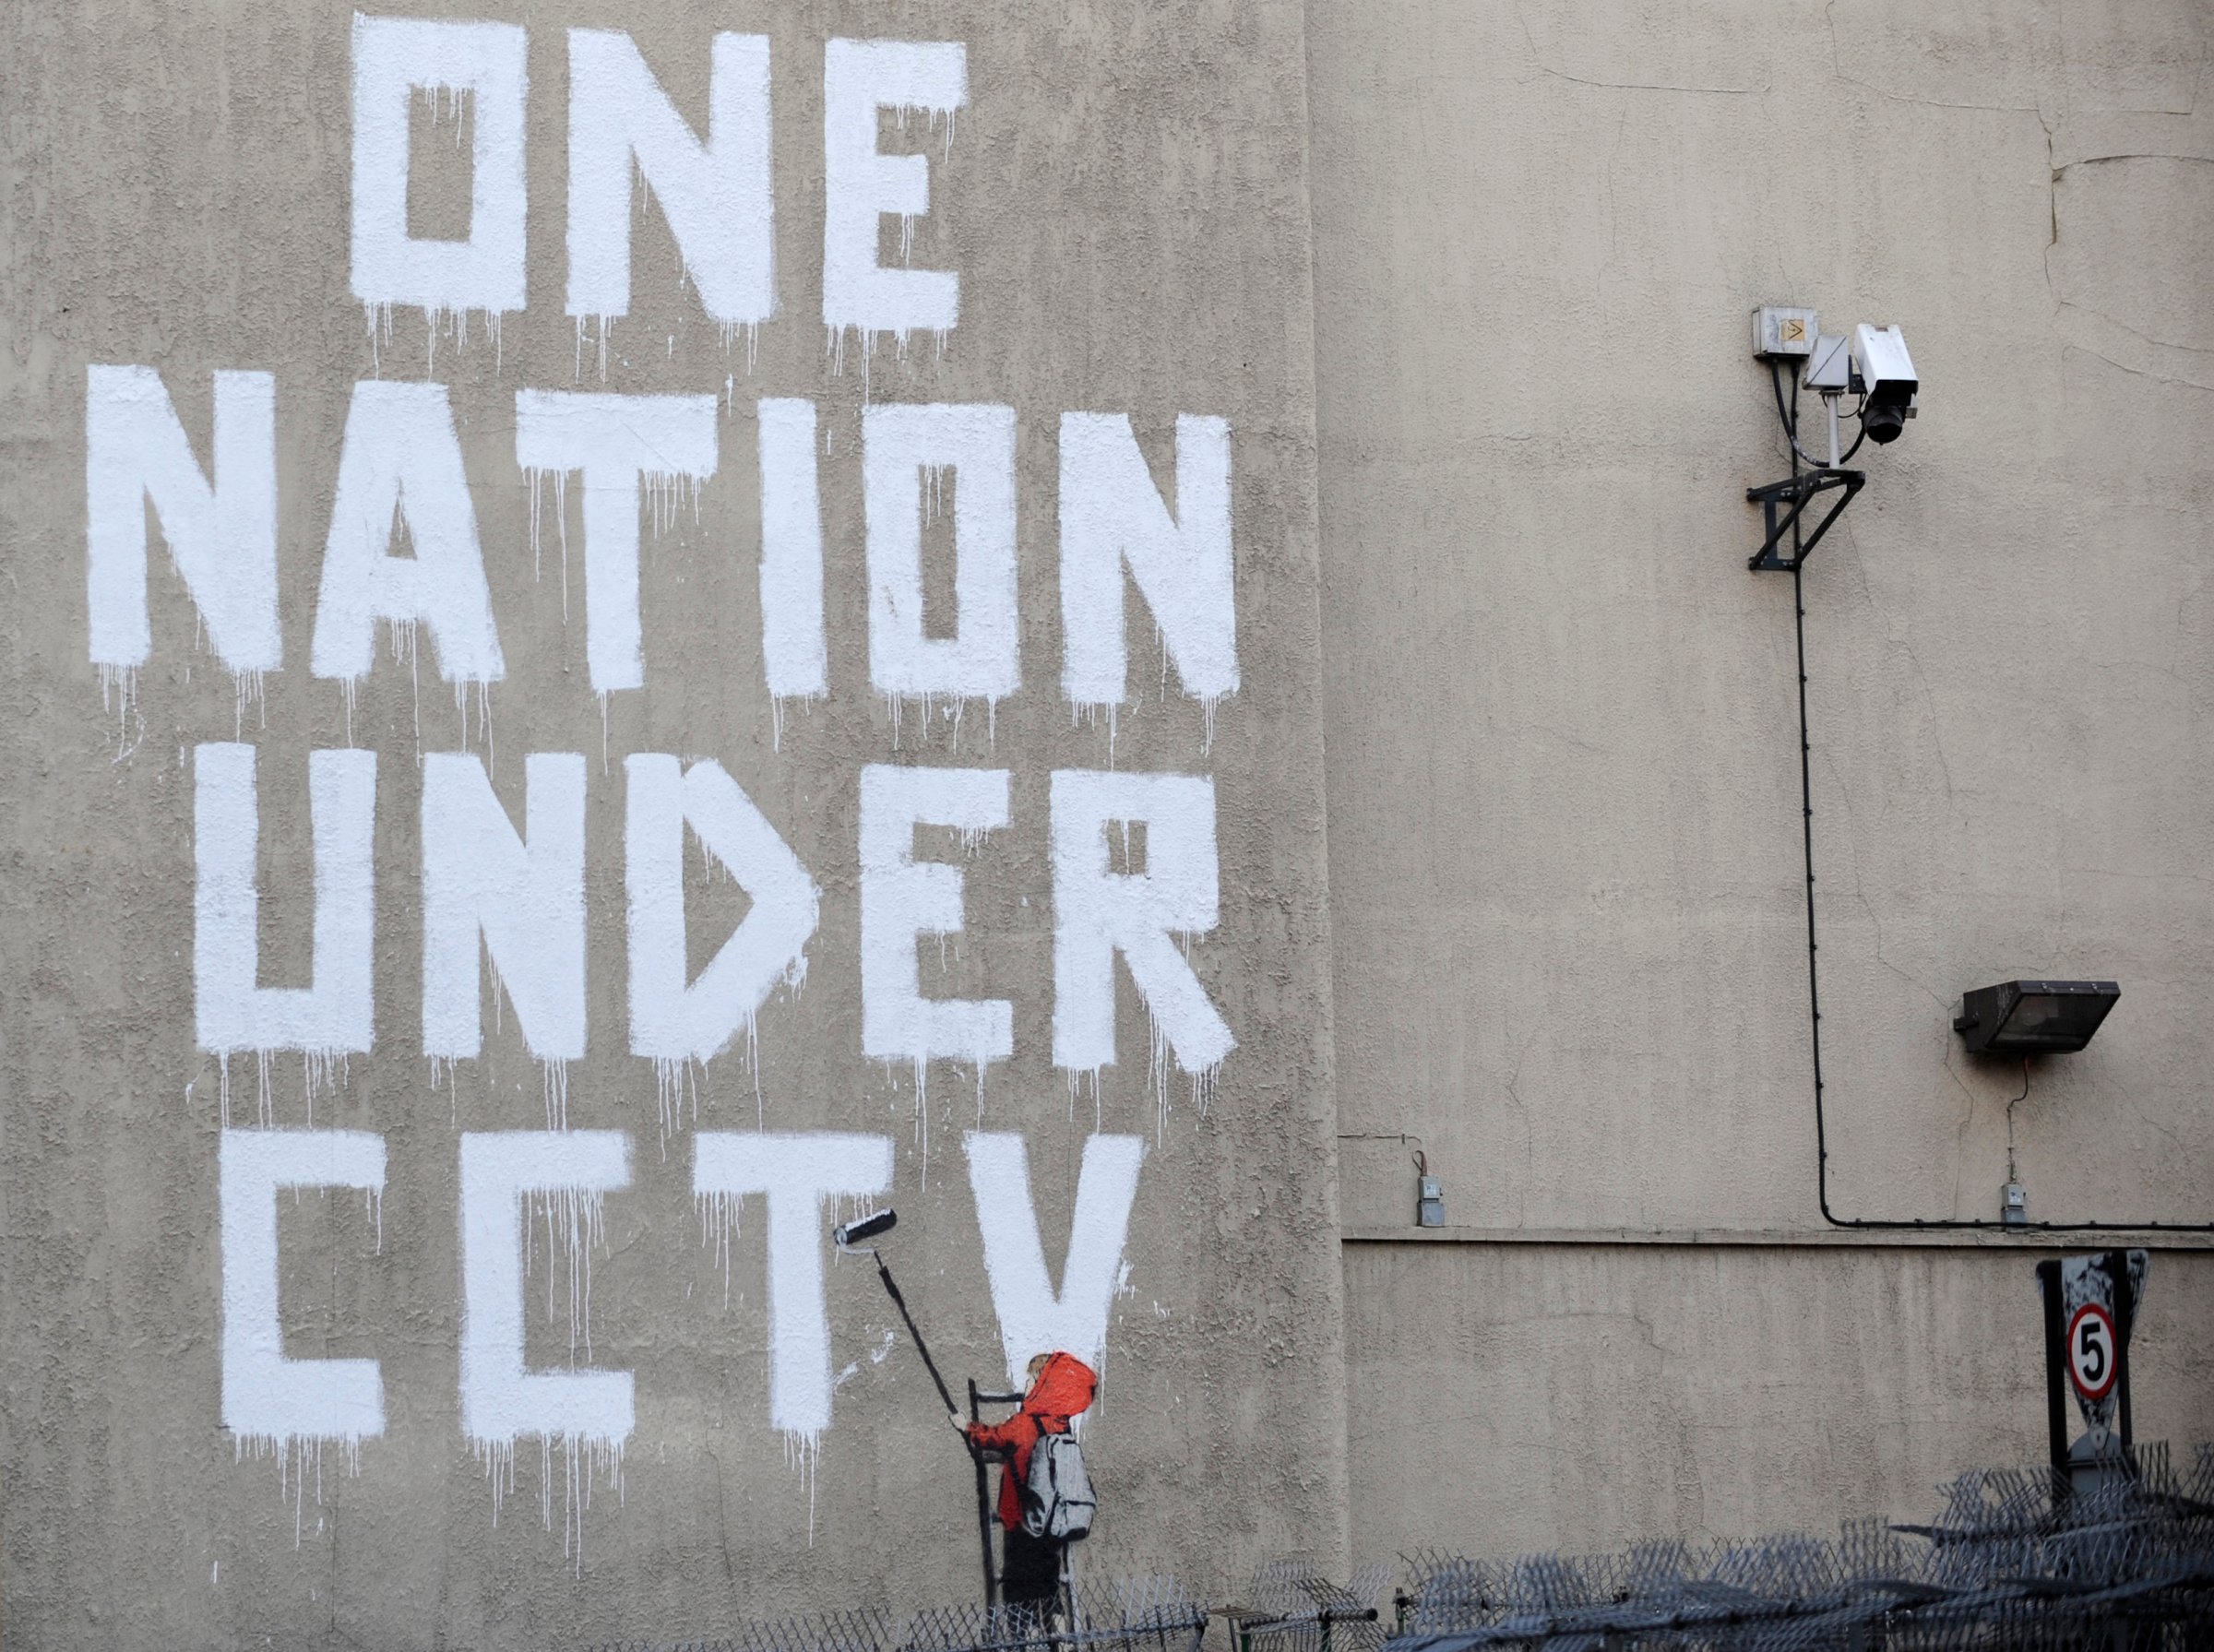 Street graffiti by elusive graffiti artist Banksy is seen on a wall in central London